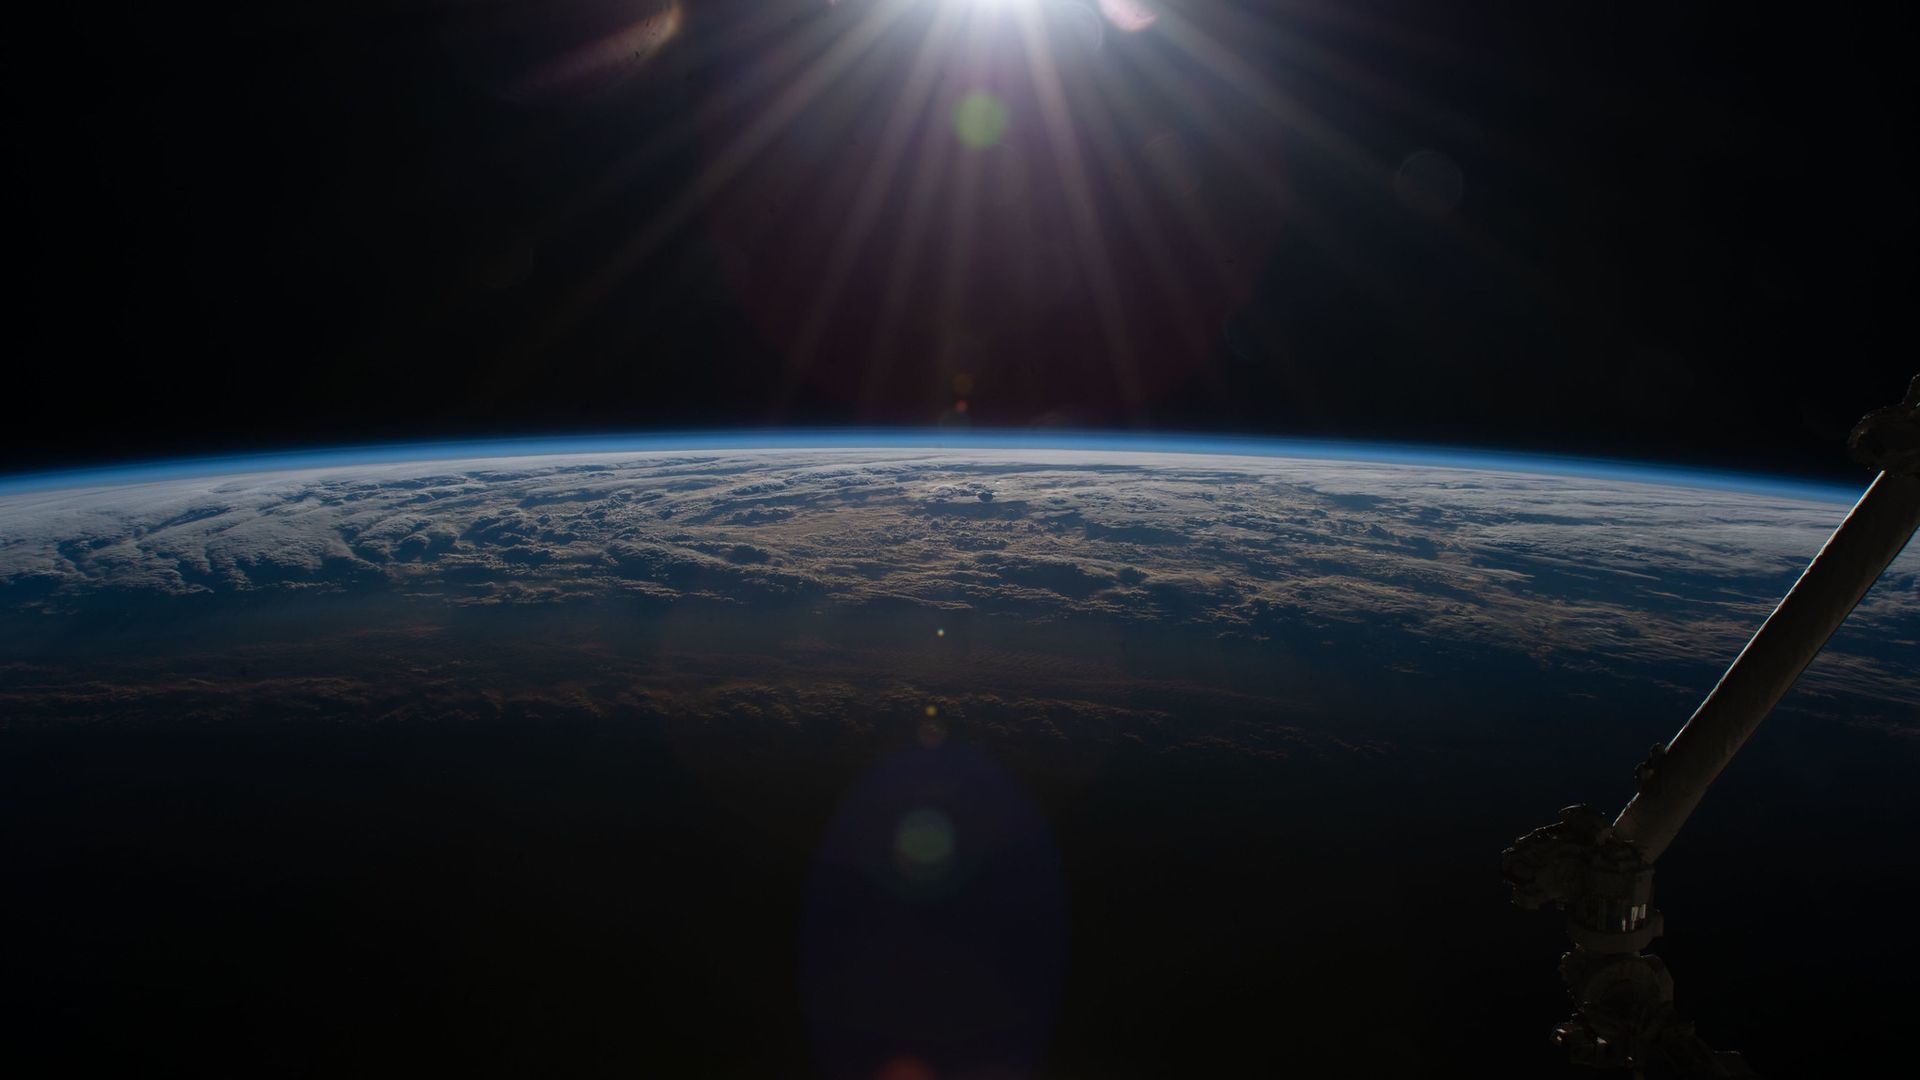 A sunrise seen from orbit